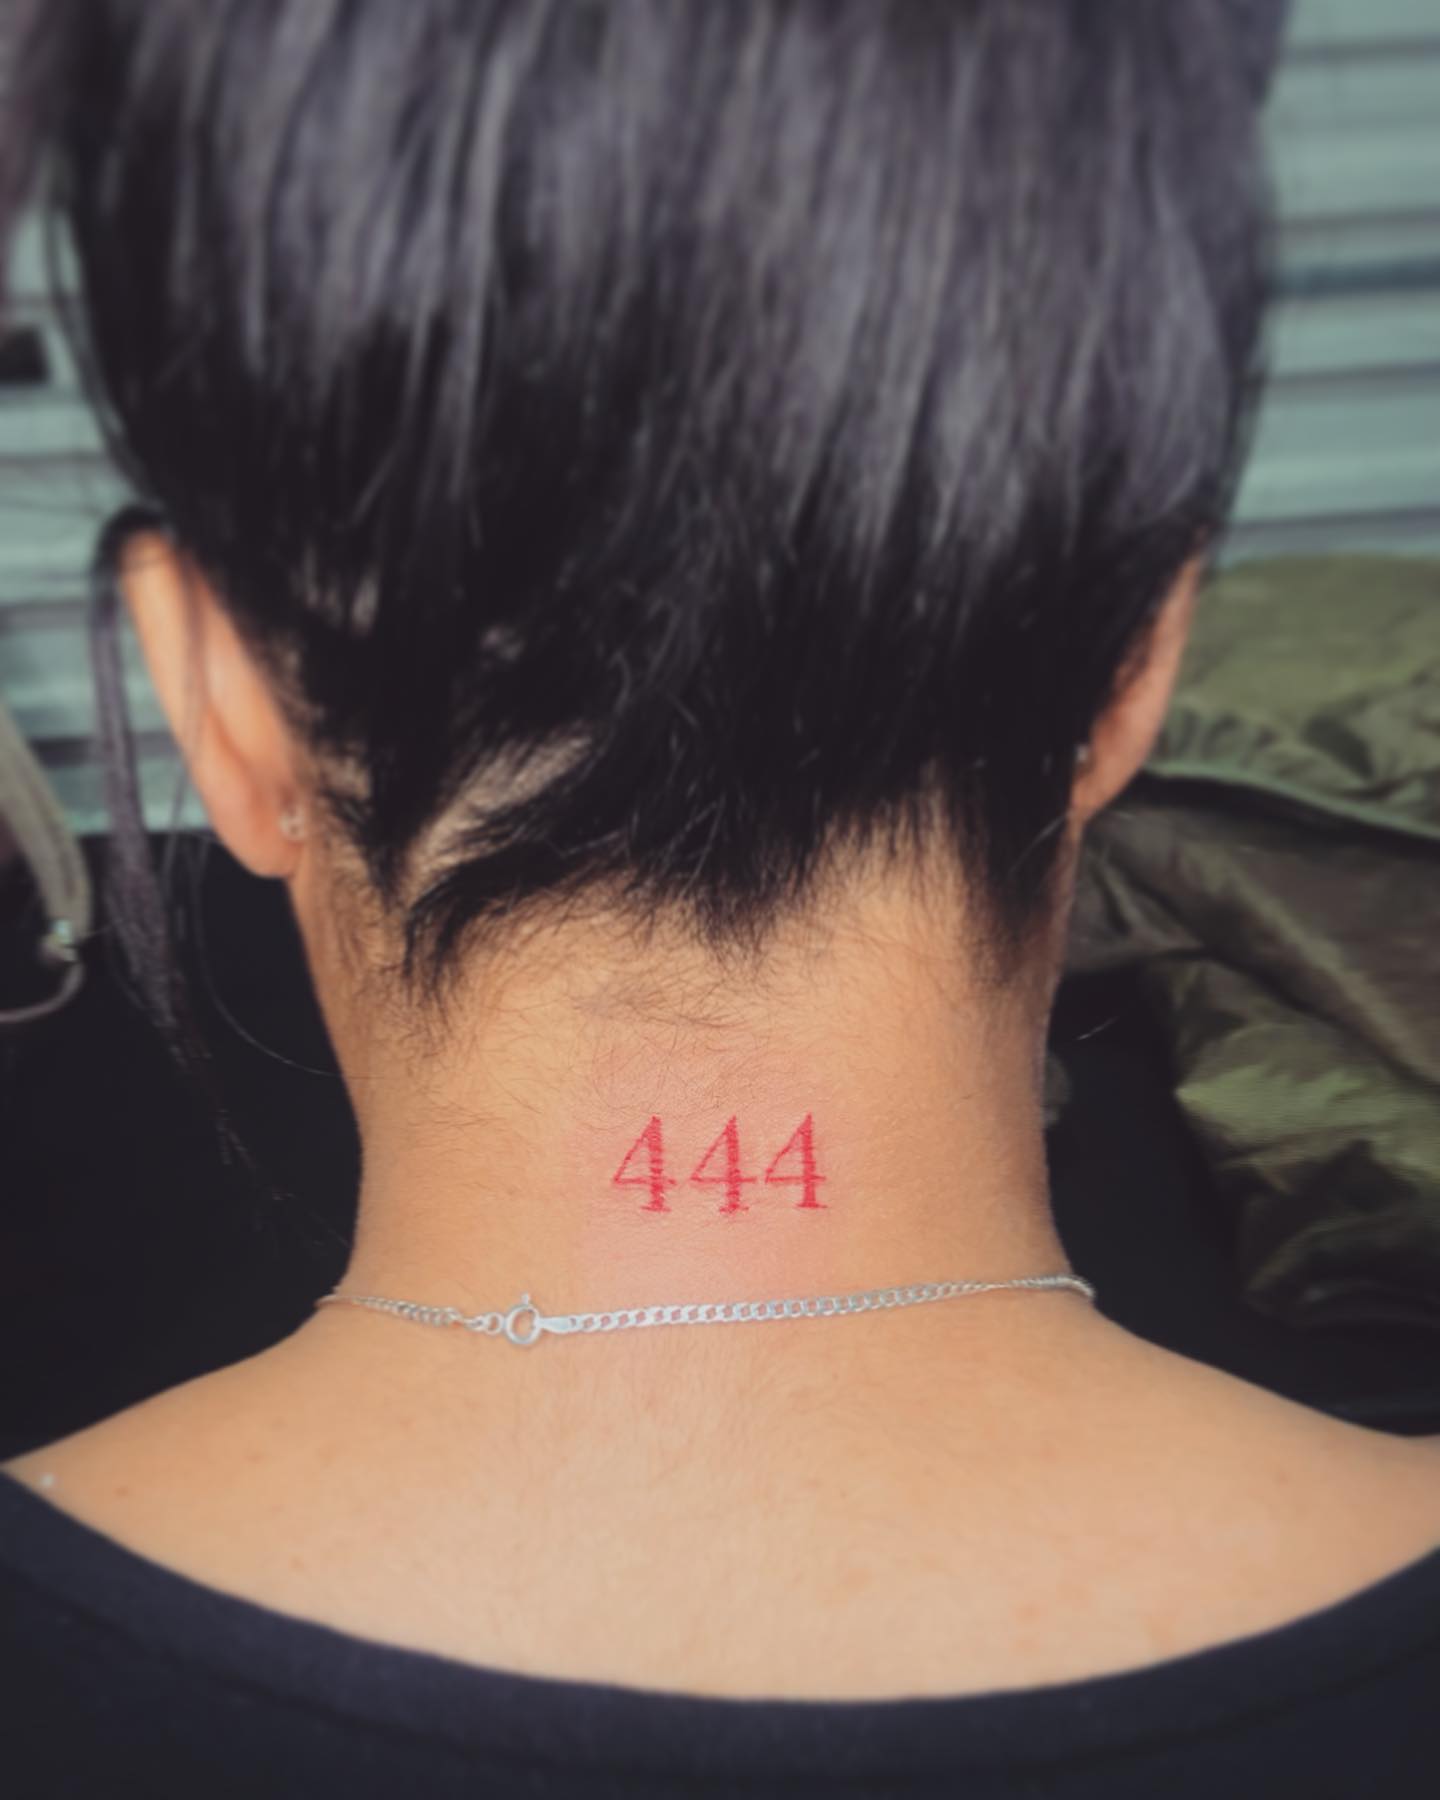 Who else wants a neck tattoo  angelnumbers 444 necktattoo  TikTok